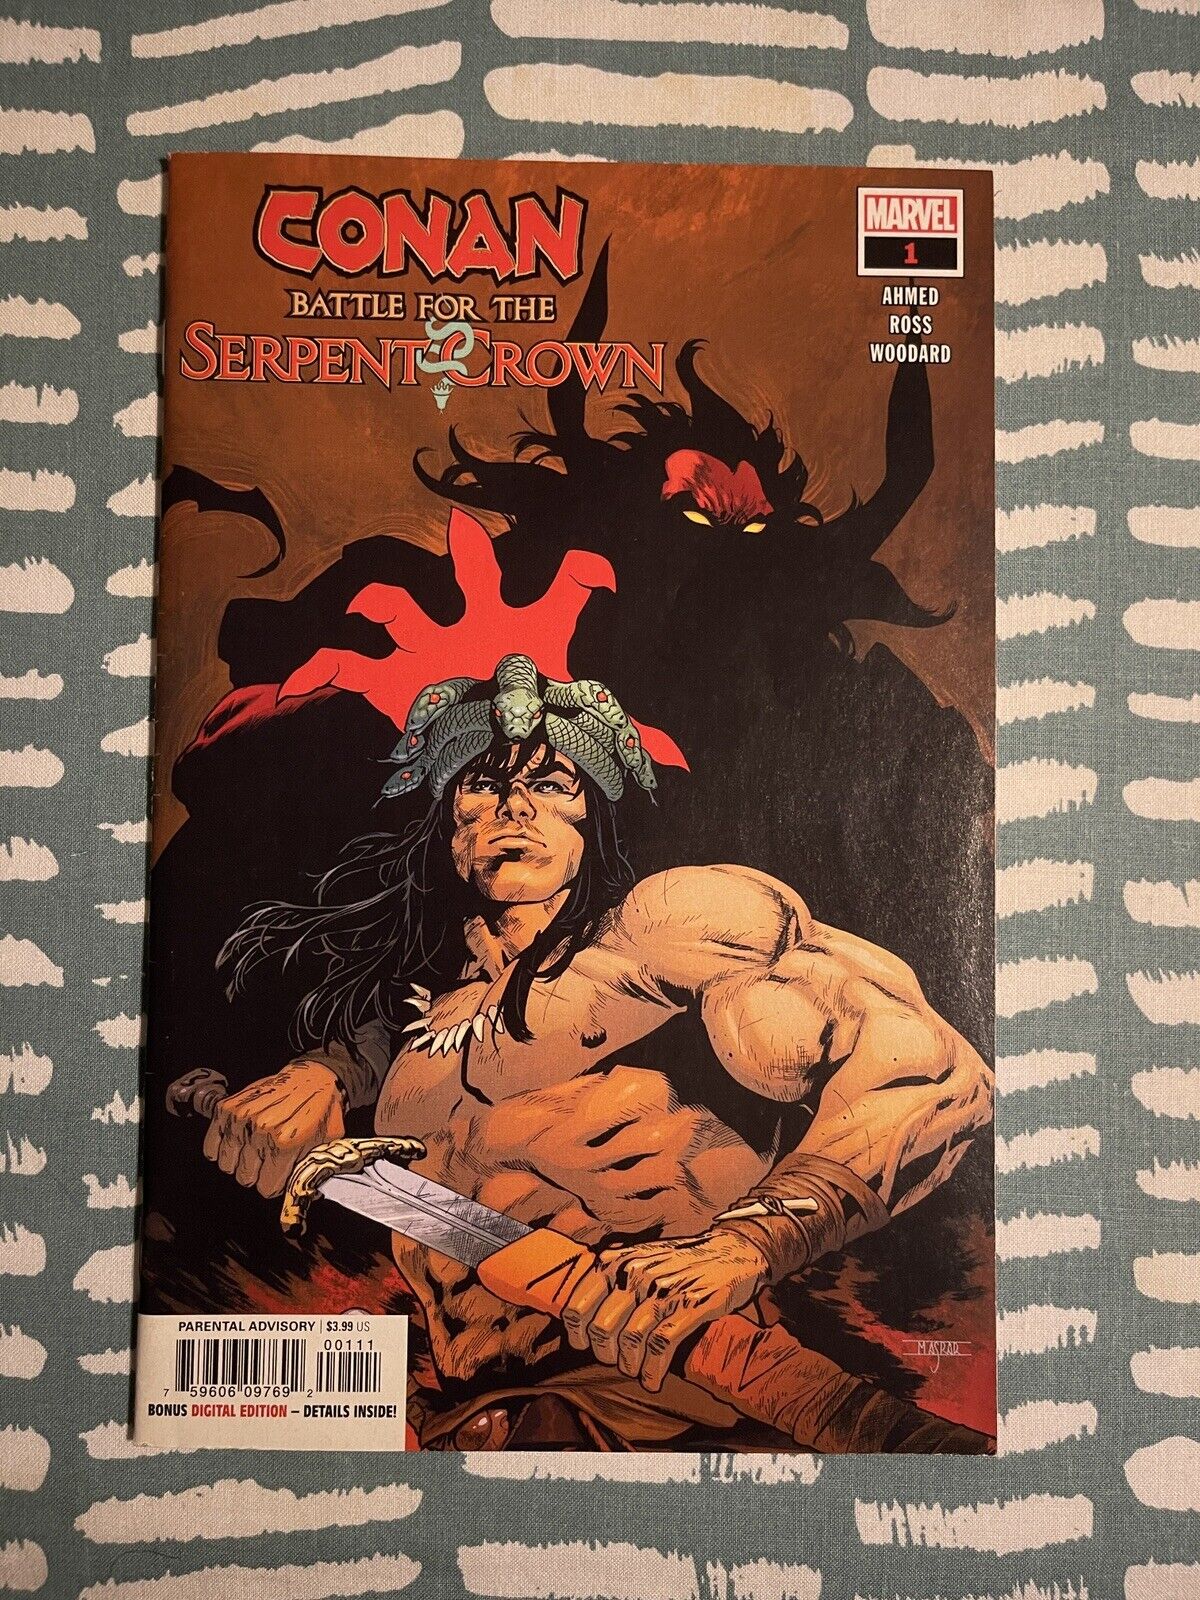 Conan: Battle for the Serpent Crown #1 - Marvel Comics